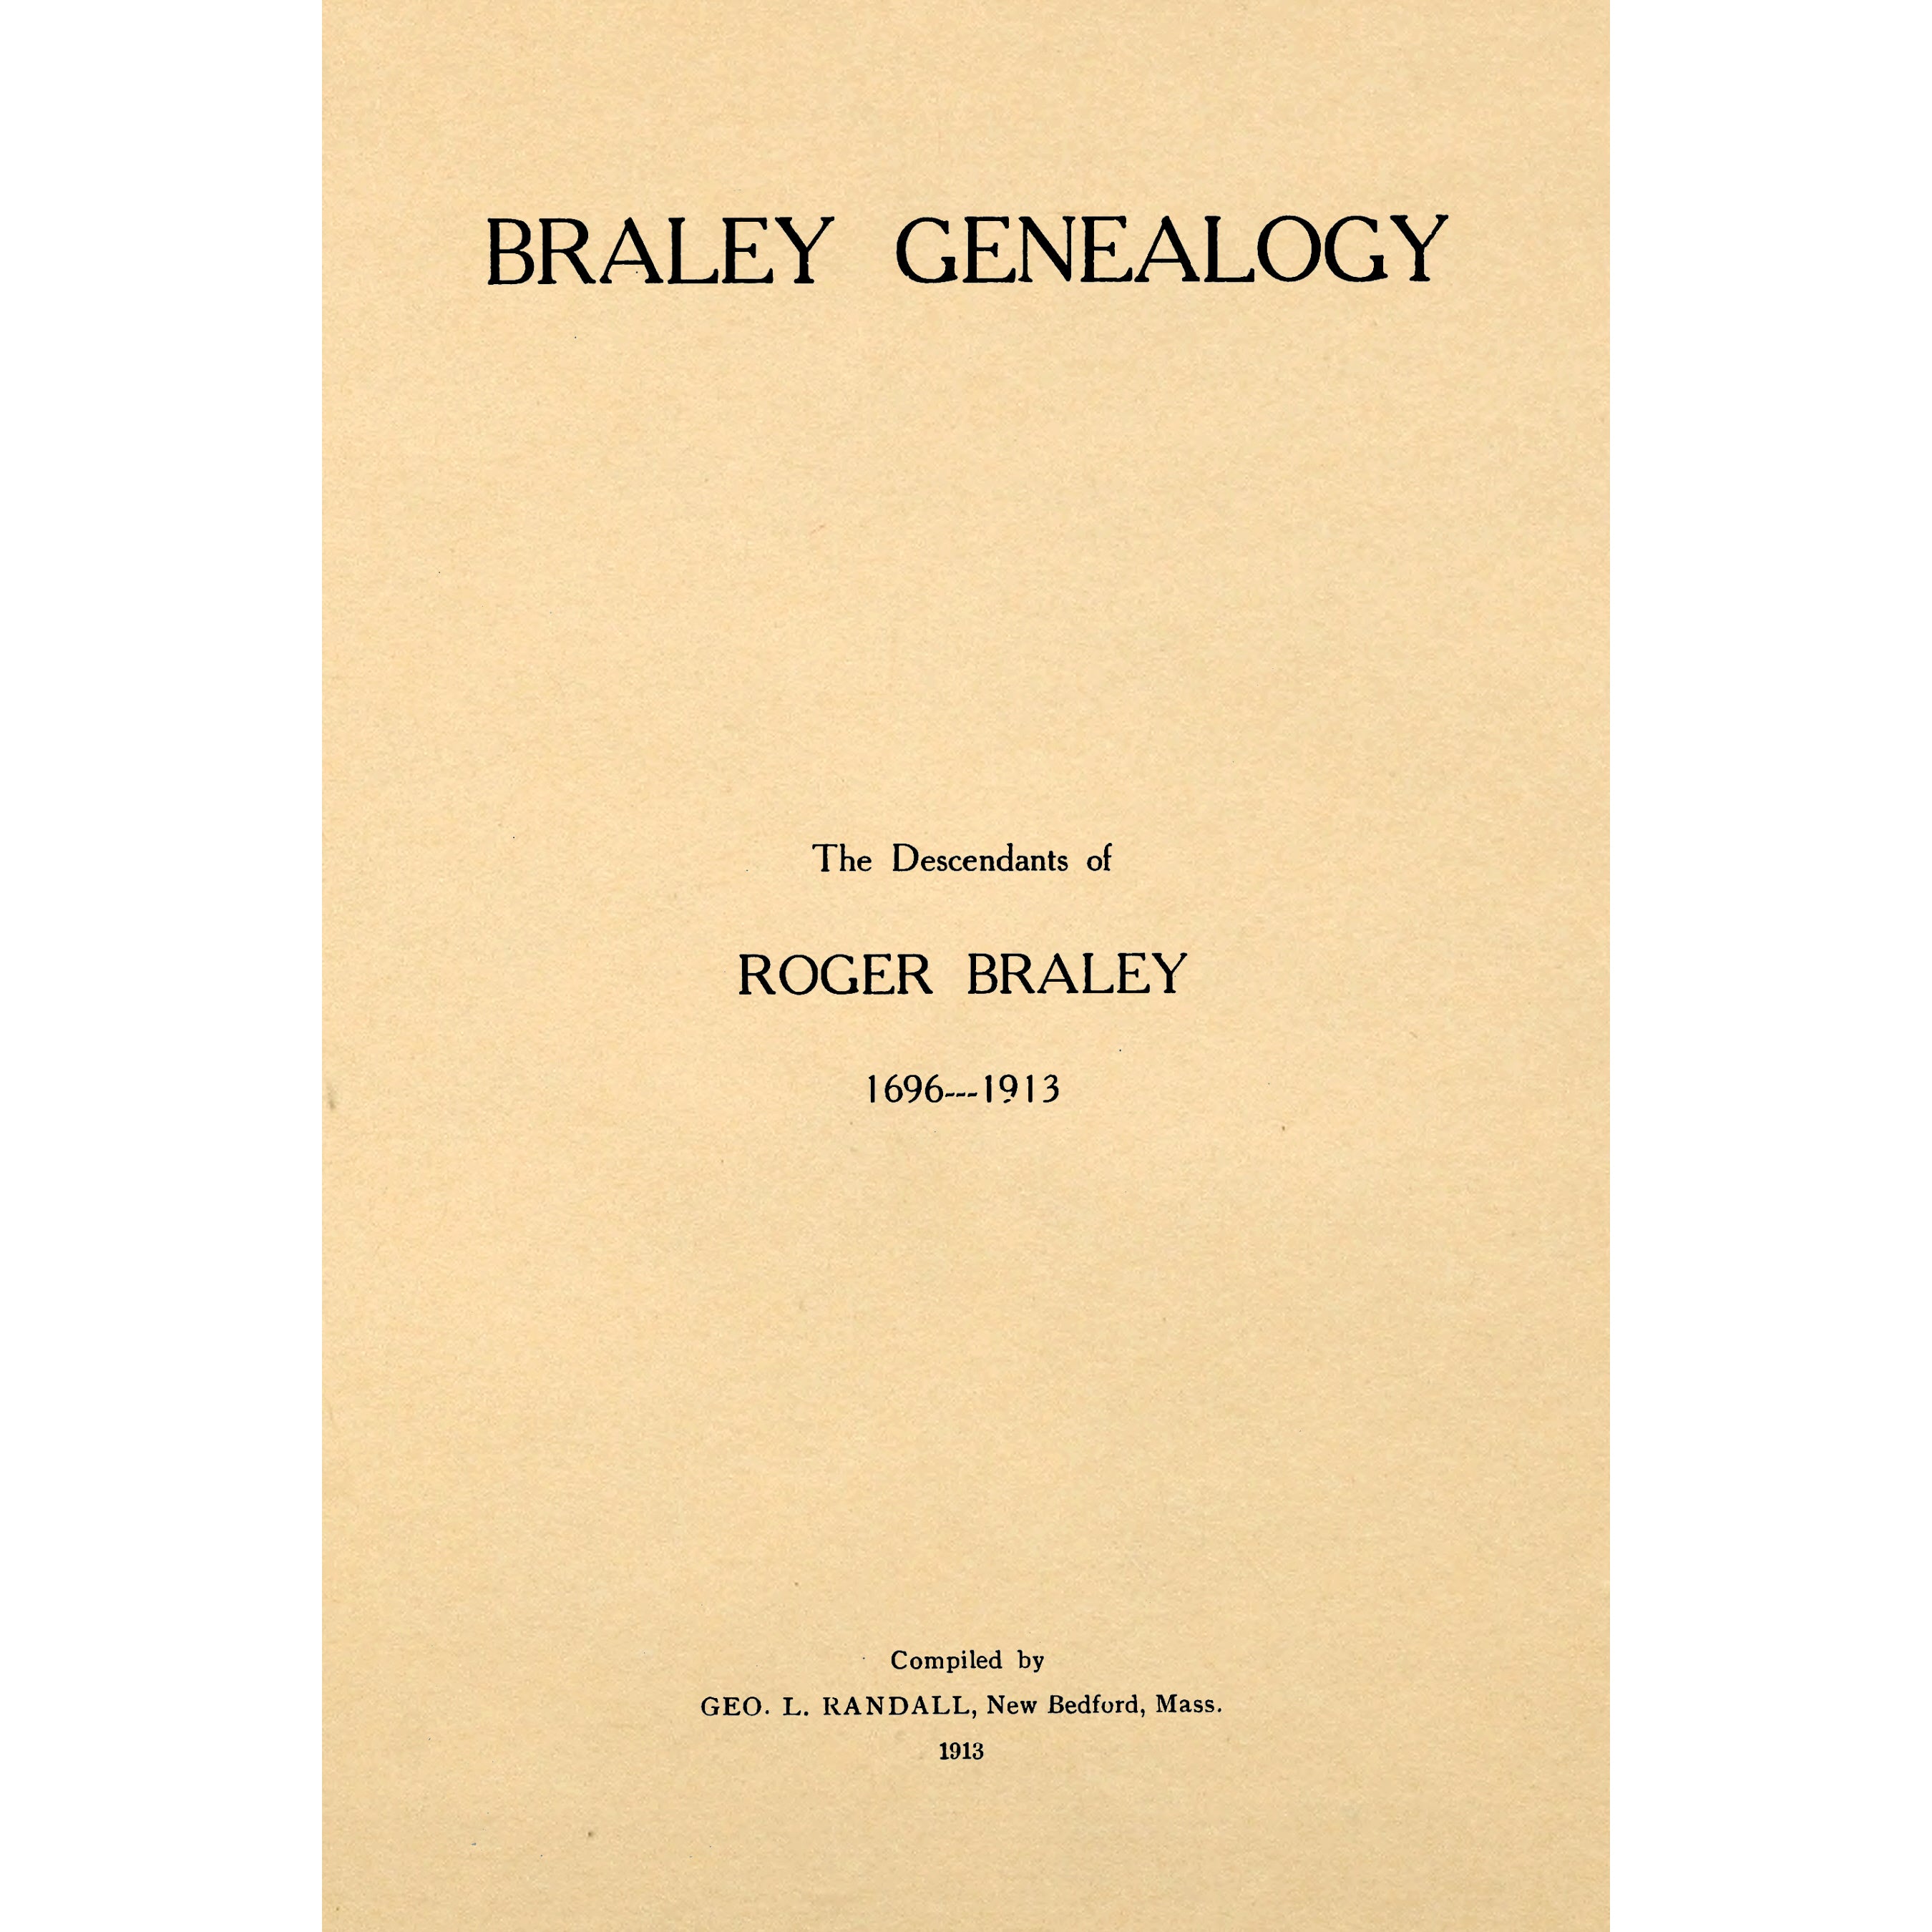 Braley genealogy; the descendants of Roger Braley 1696-1913